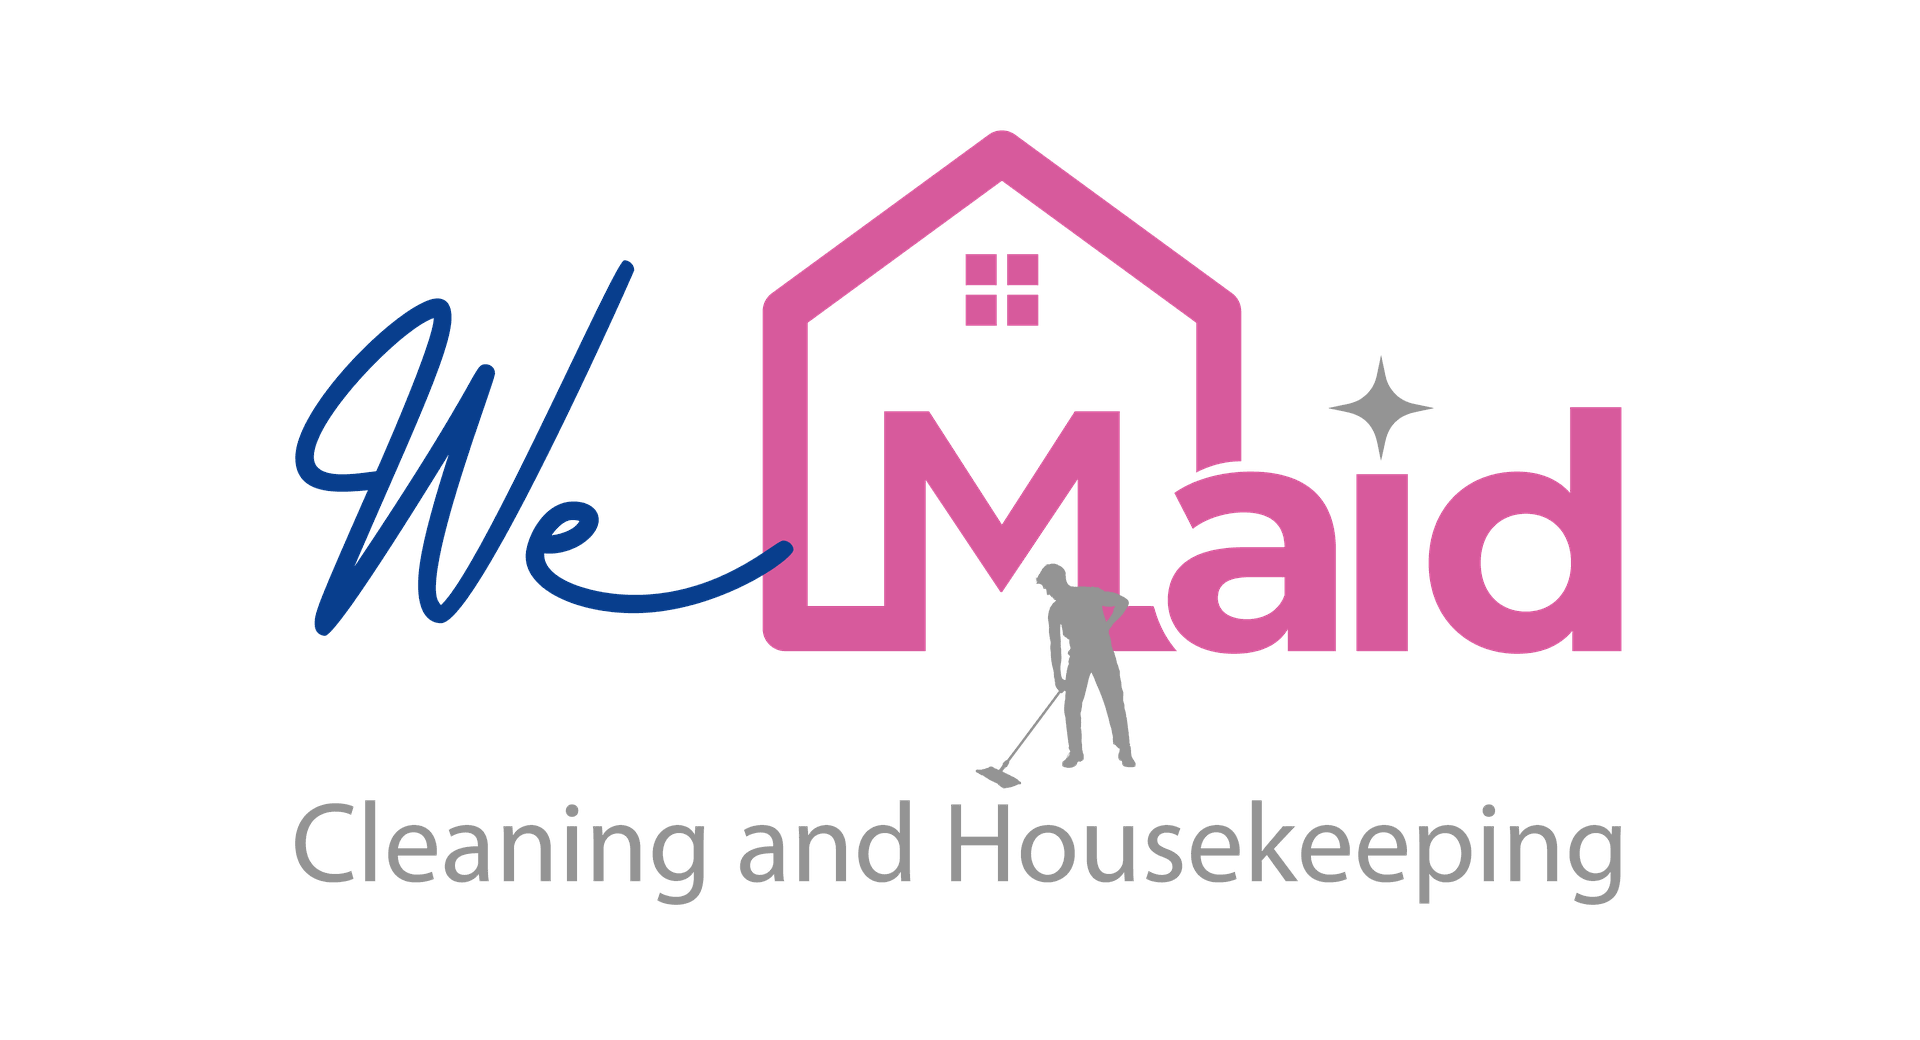 We Maid LLC